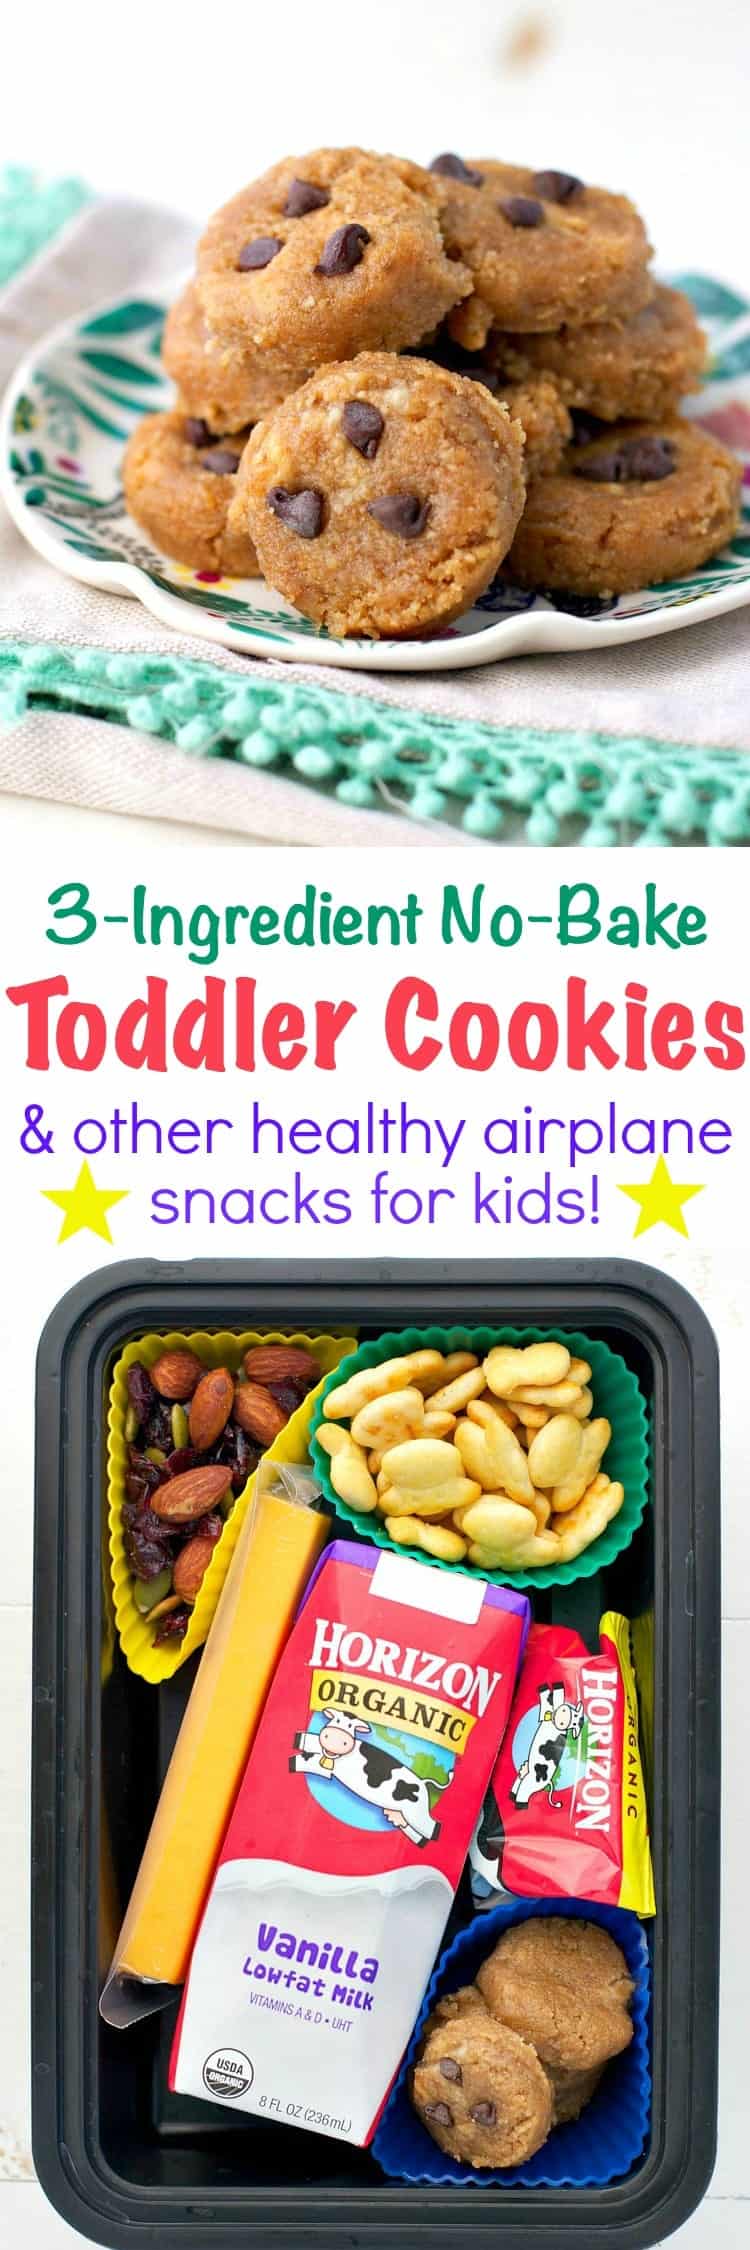 https://www.theseasonedmom.com/wp-content/uploads/2016/06/Healthy-Airplane-Snacks-for-Kids.jpg